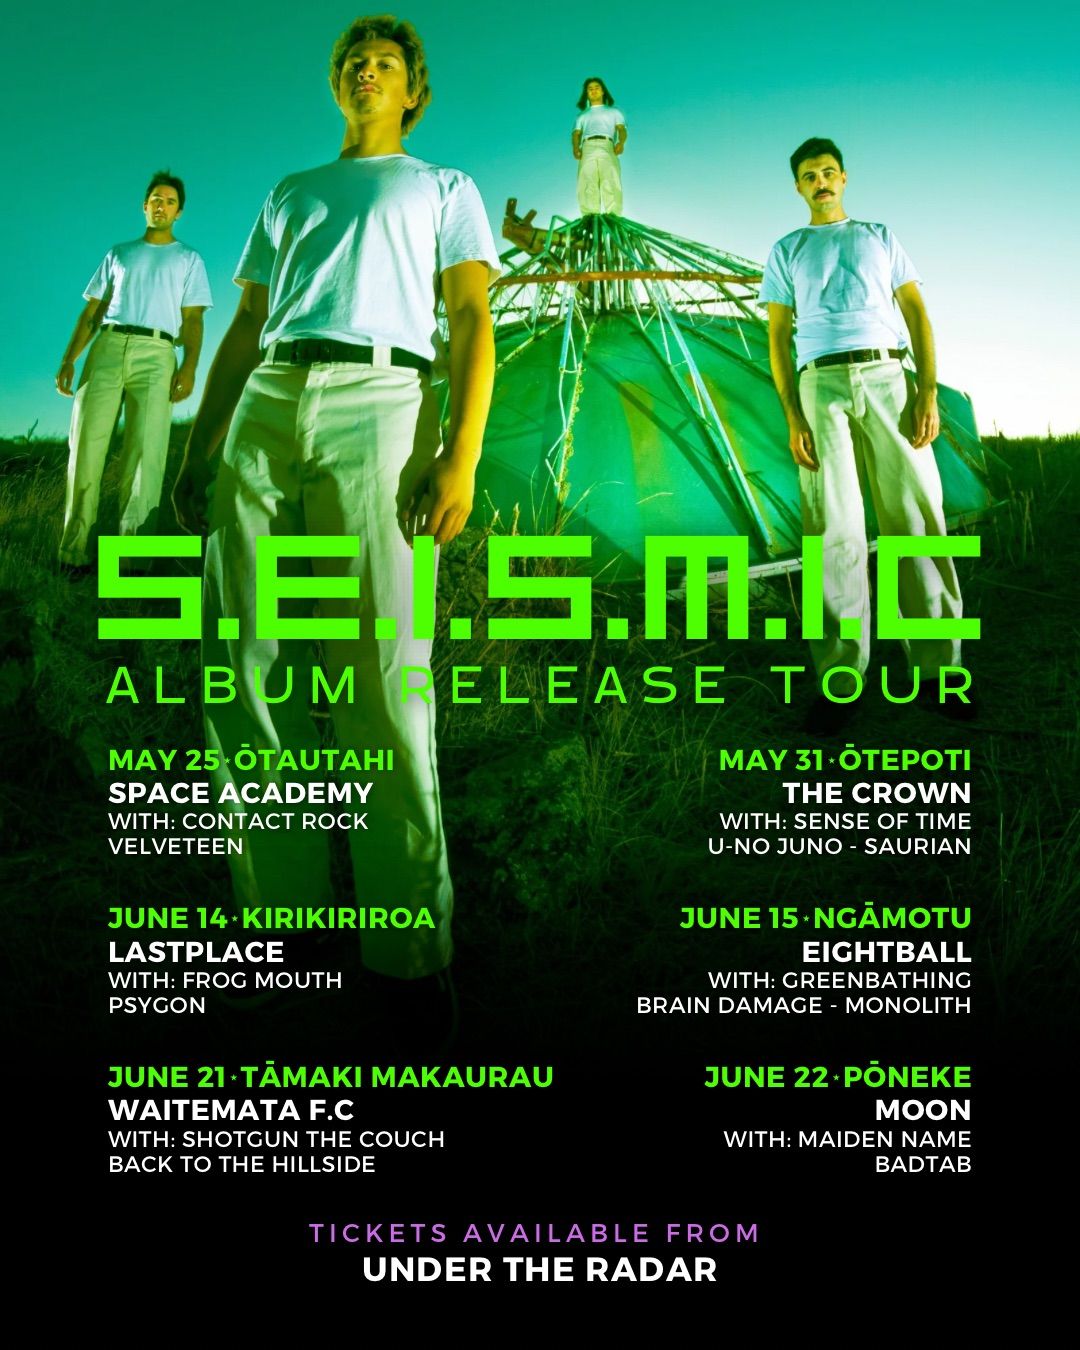 S.E.I.S.M.I.C Album Release Tour - Moon (Wellington)